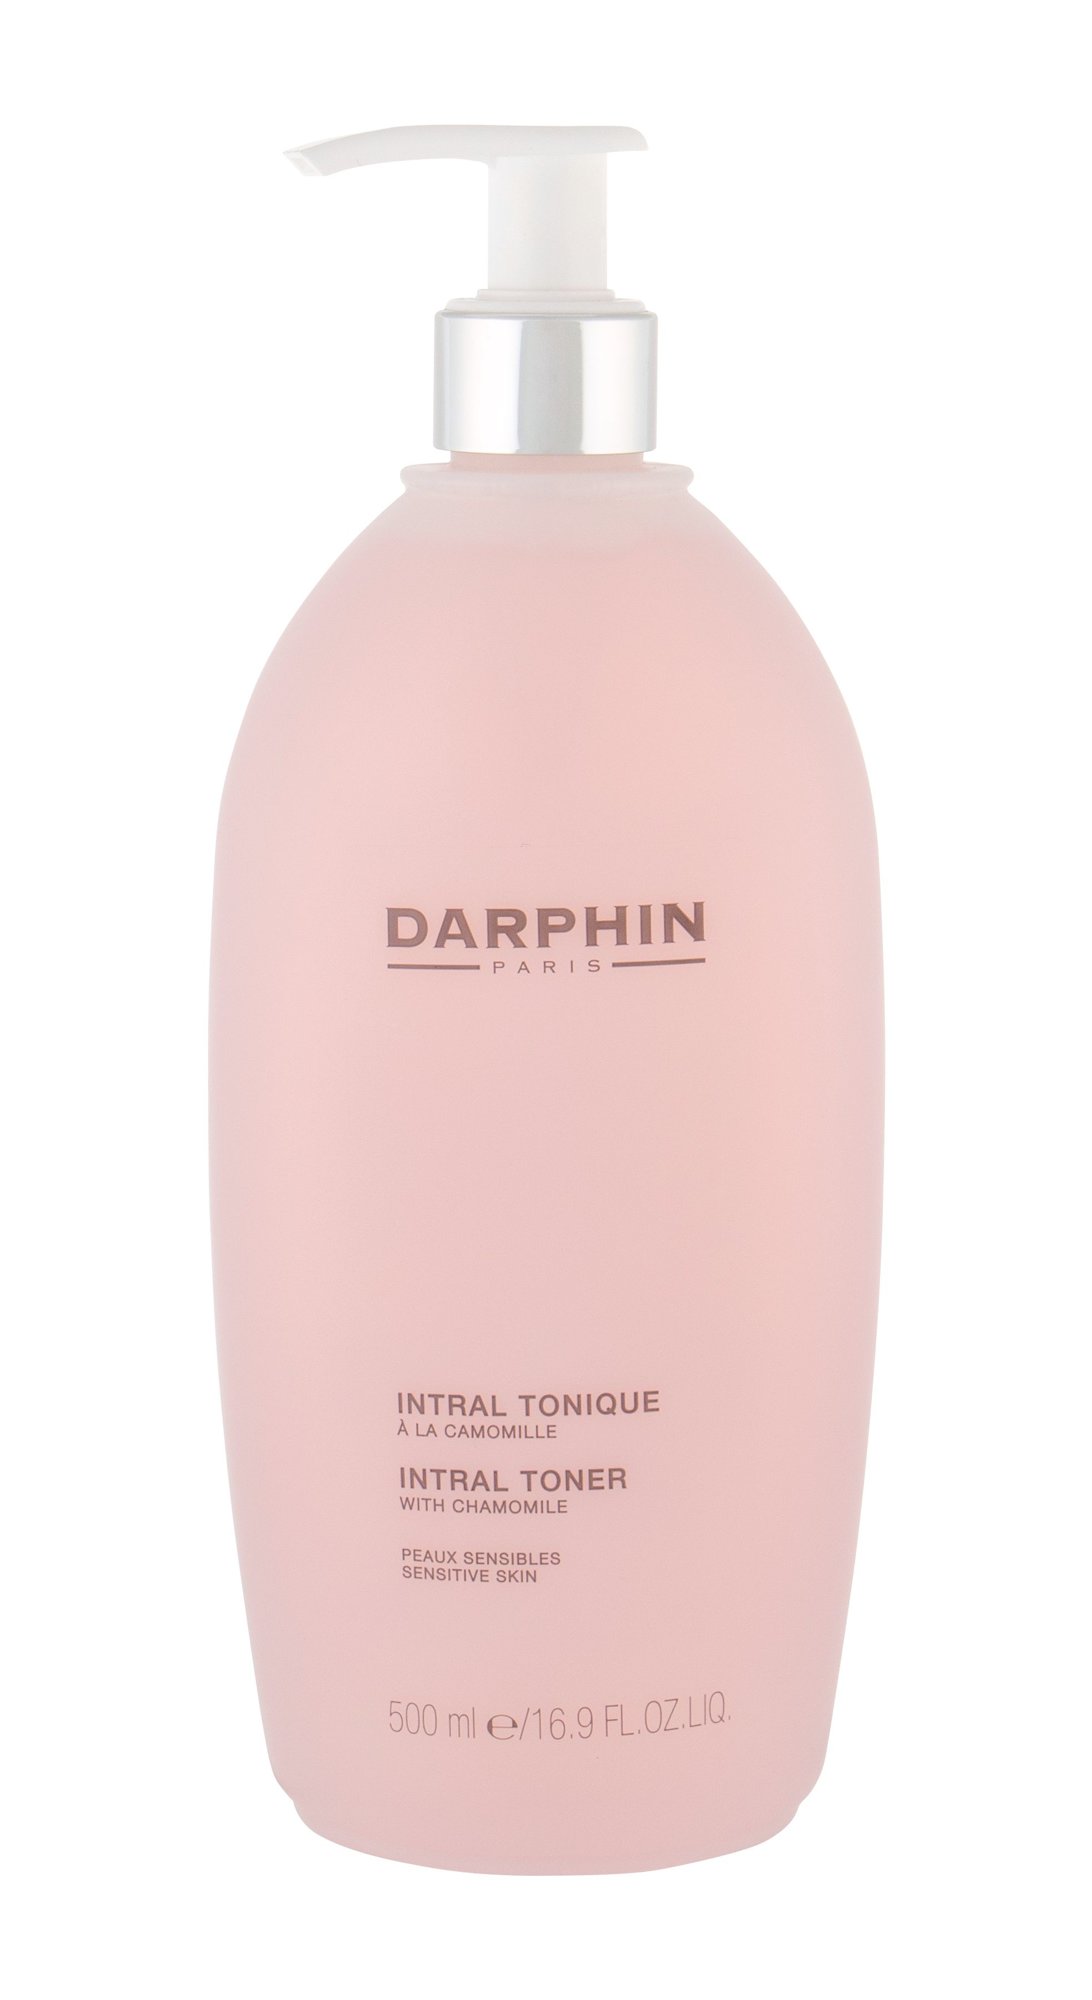 Darphin Intral 500ml valomasis vanduo veidui